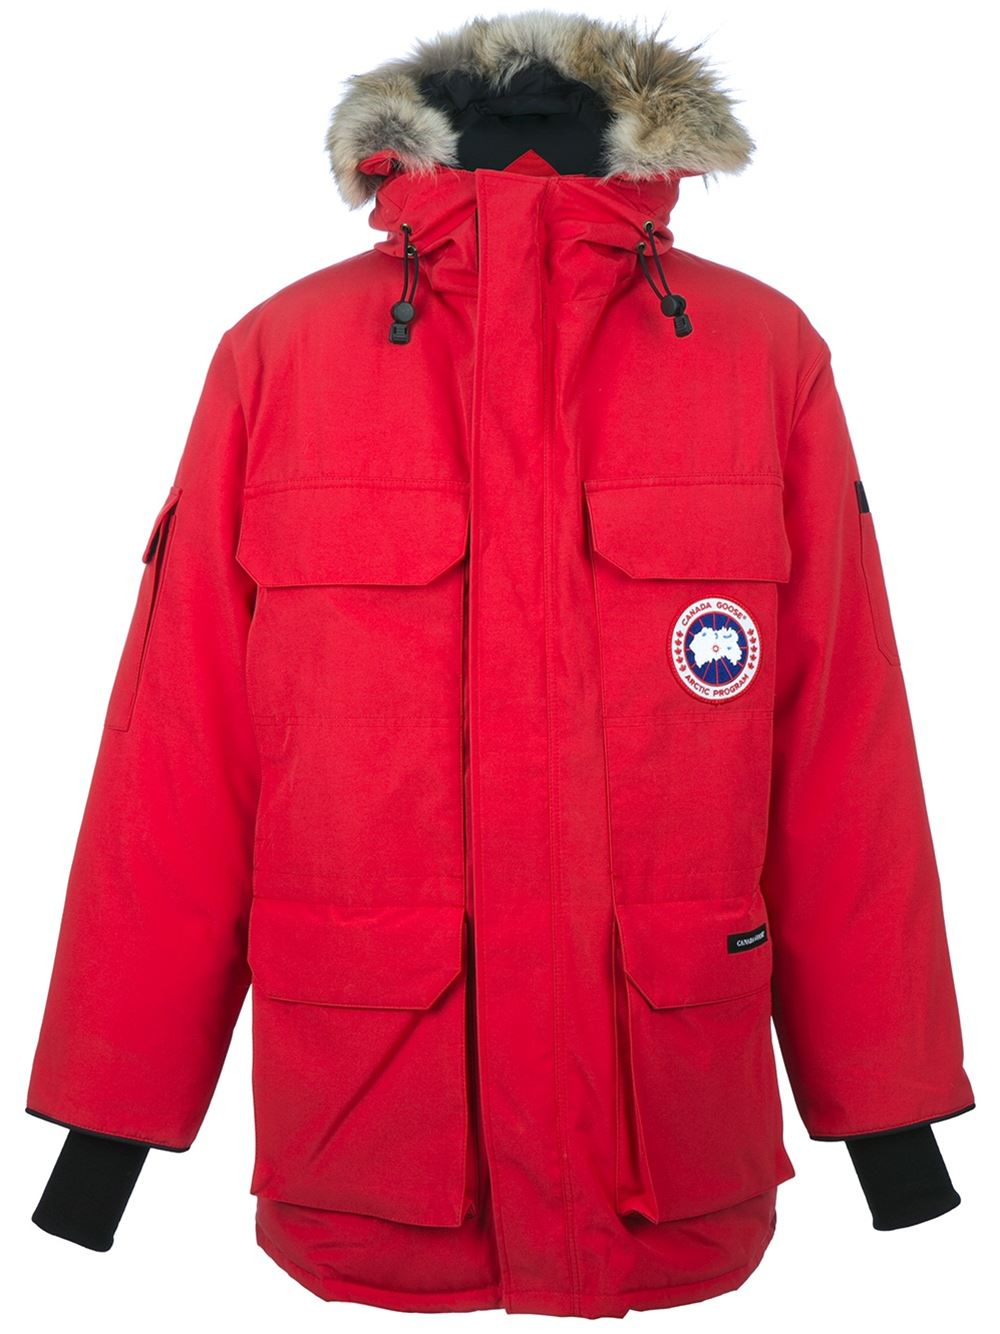 Canada Goose Parka Coat in Red for Men - Lyst